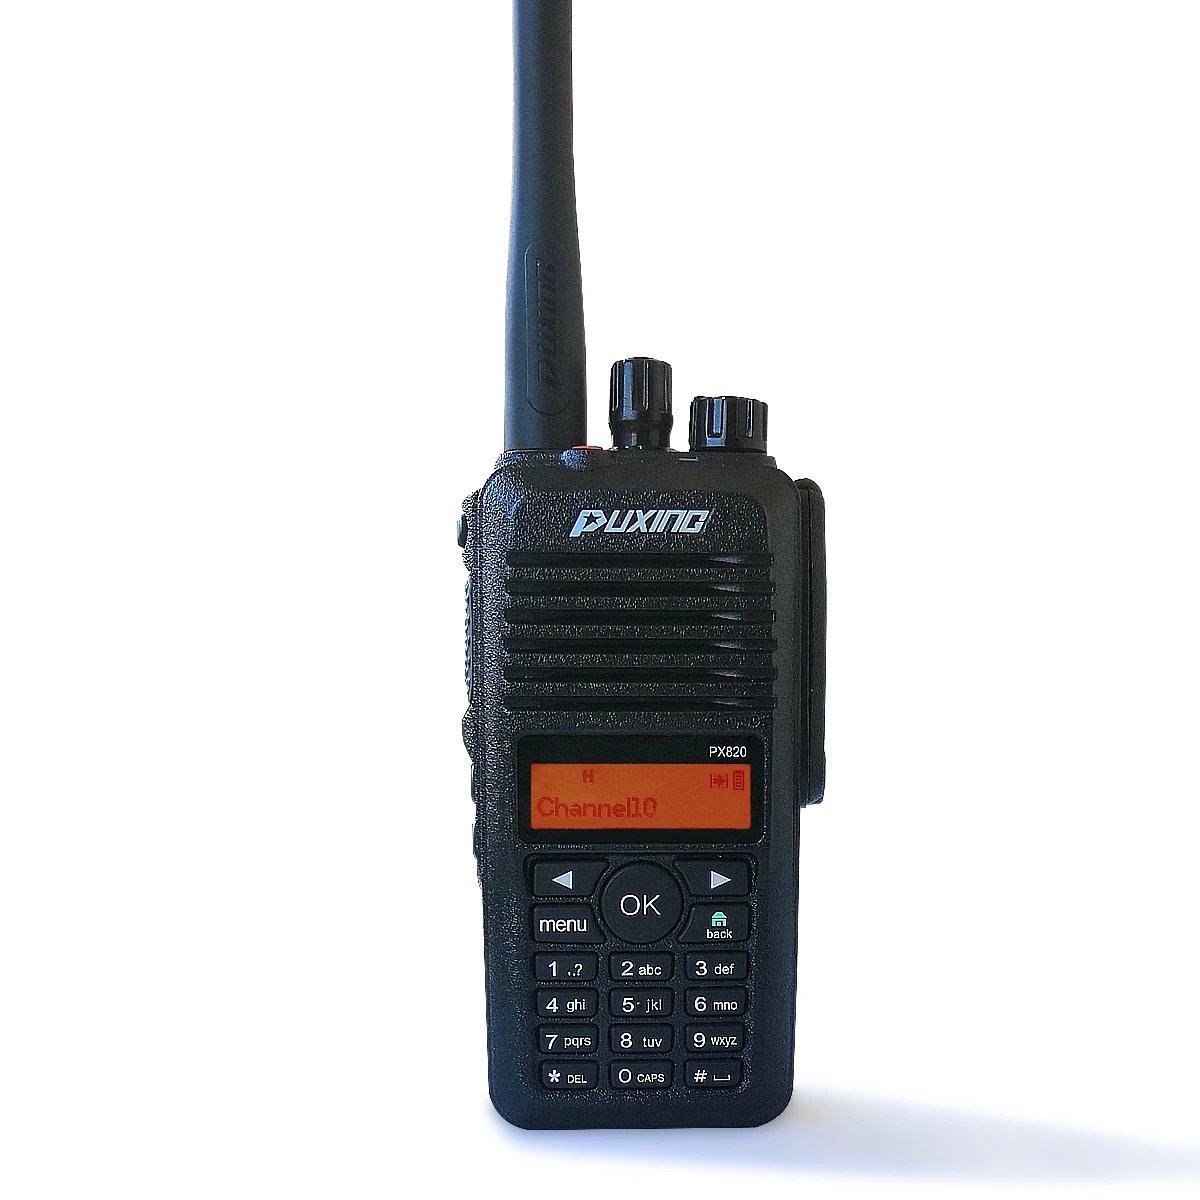 PUXING professional DMR radio PX-820 UHF VHF IP67 waterproof handheld encrypted two way radio